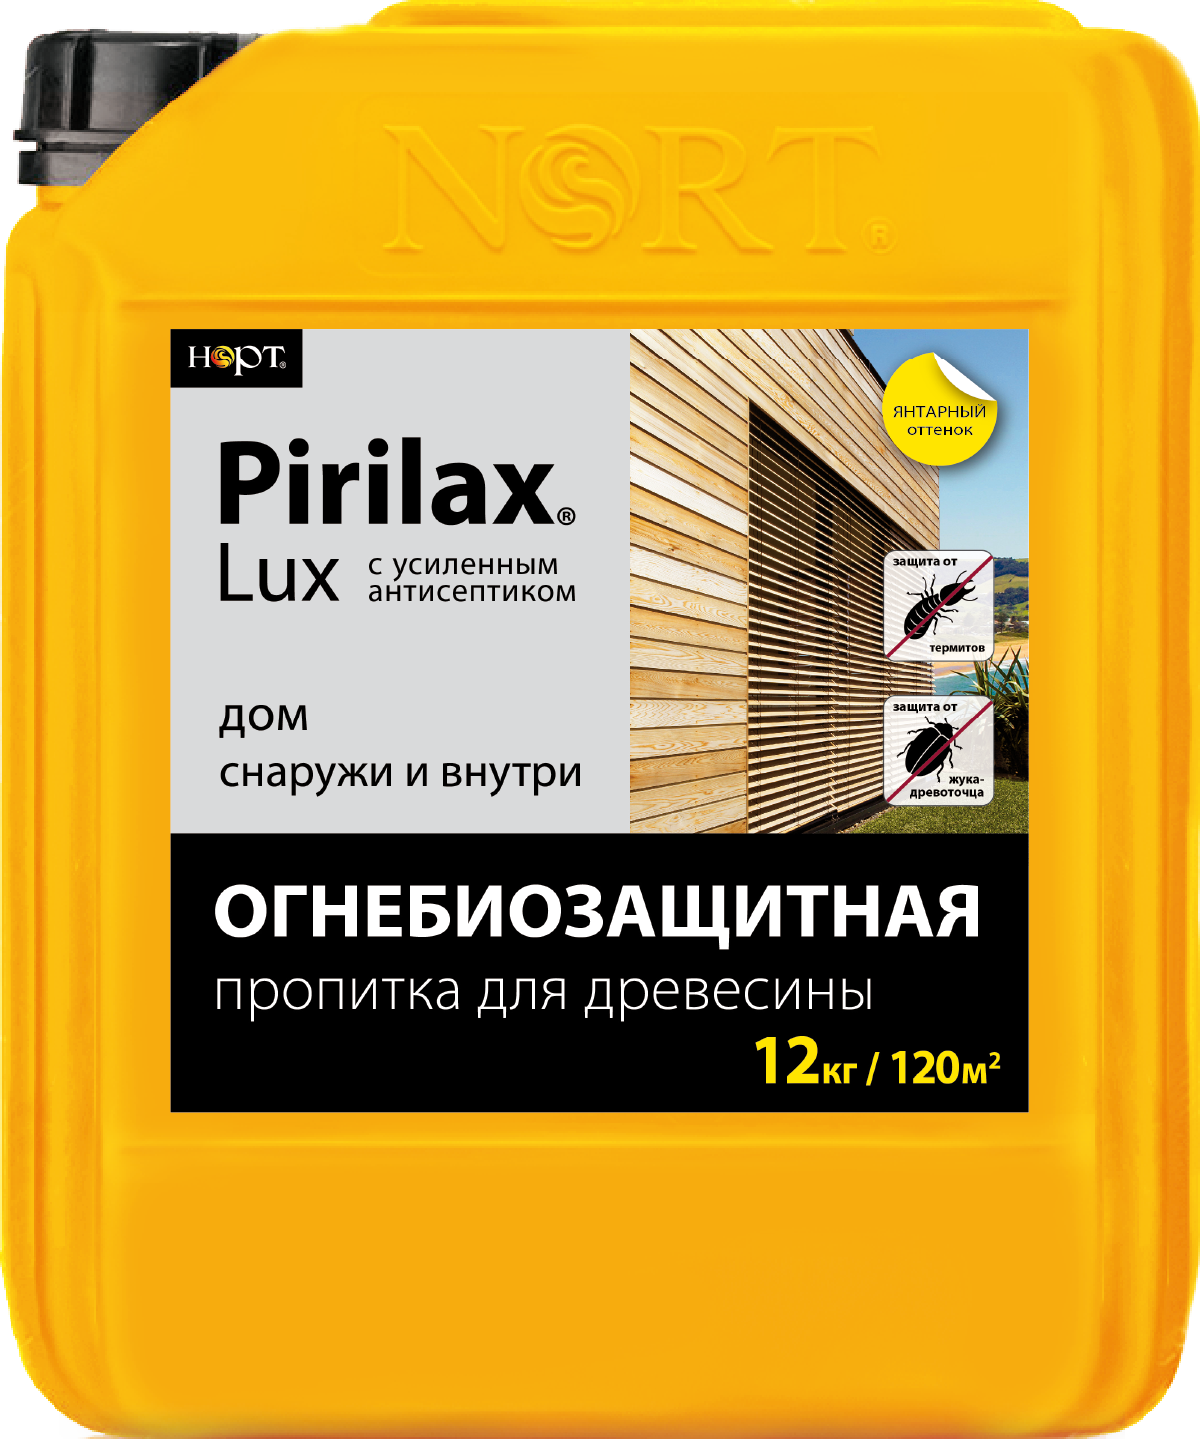 Product image for Пирилакс-Люкс